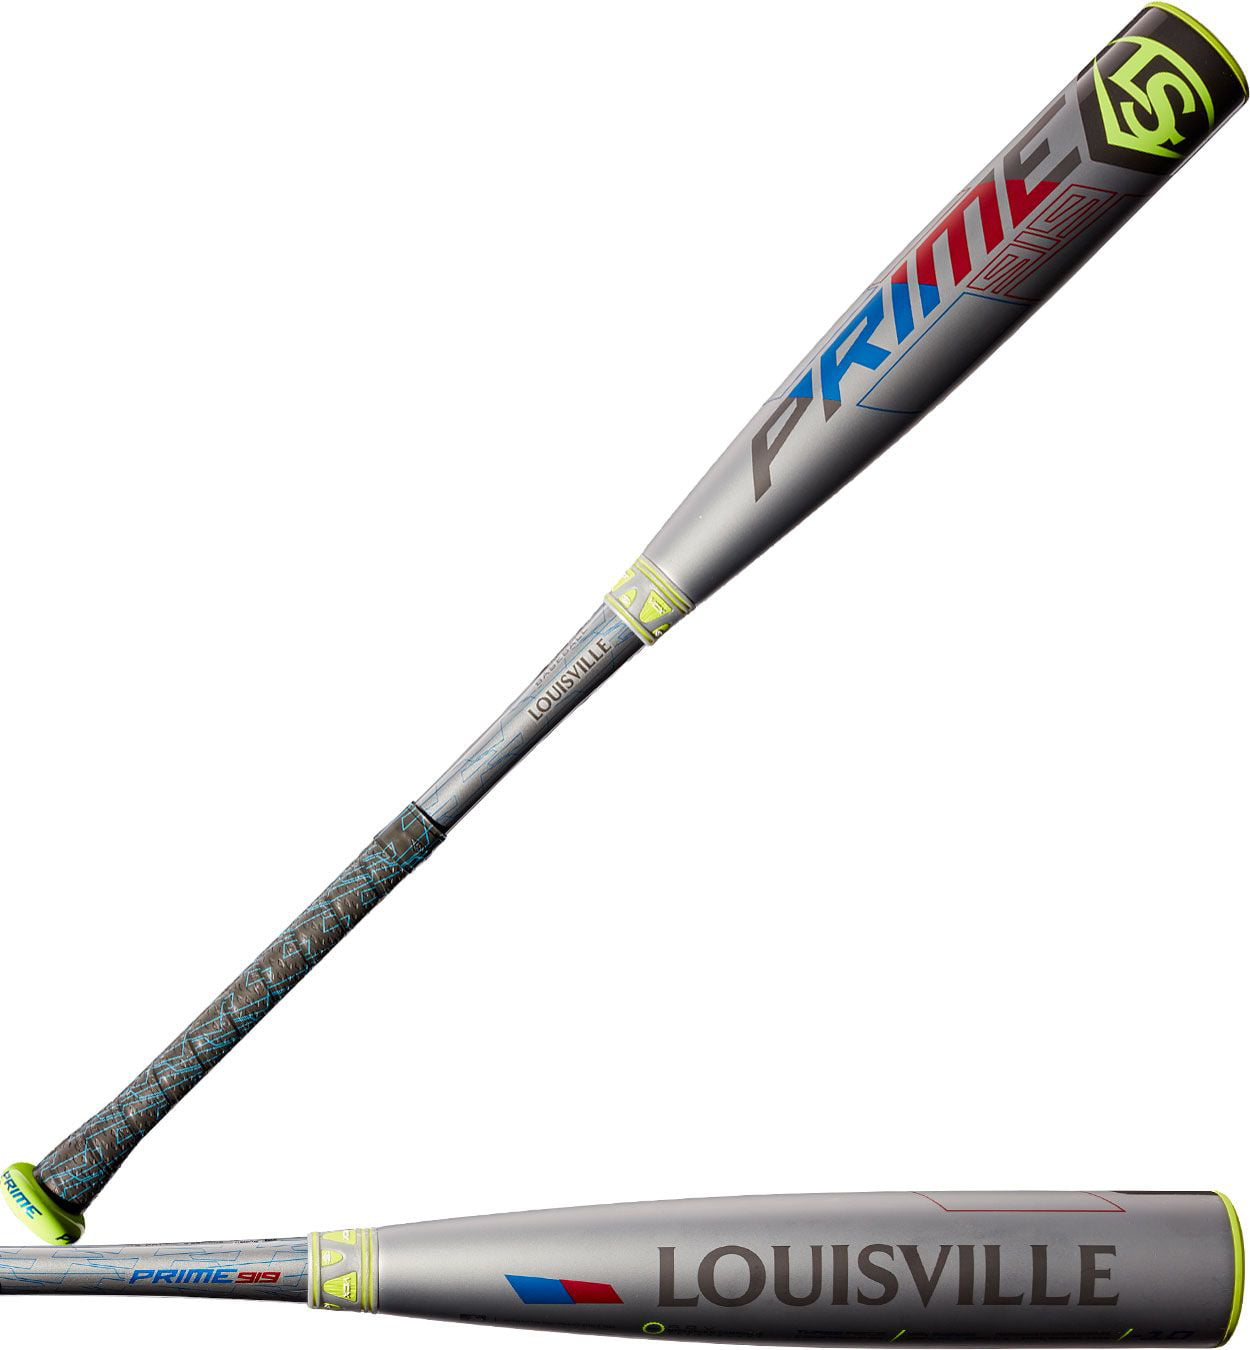 LOUISVILLE SLUGGER Premier 919 USA Youth Baseball Bat 2019 29 in environ 73.66 cm environ 538.63 g 19 oz -10 